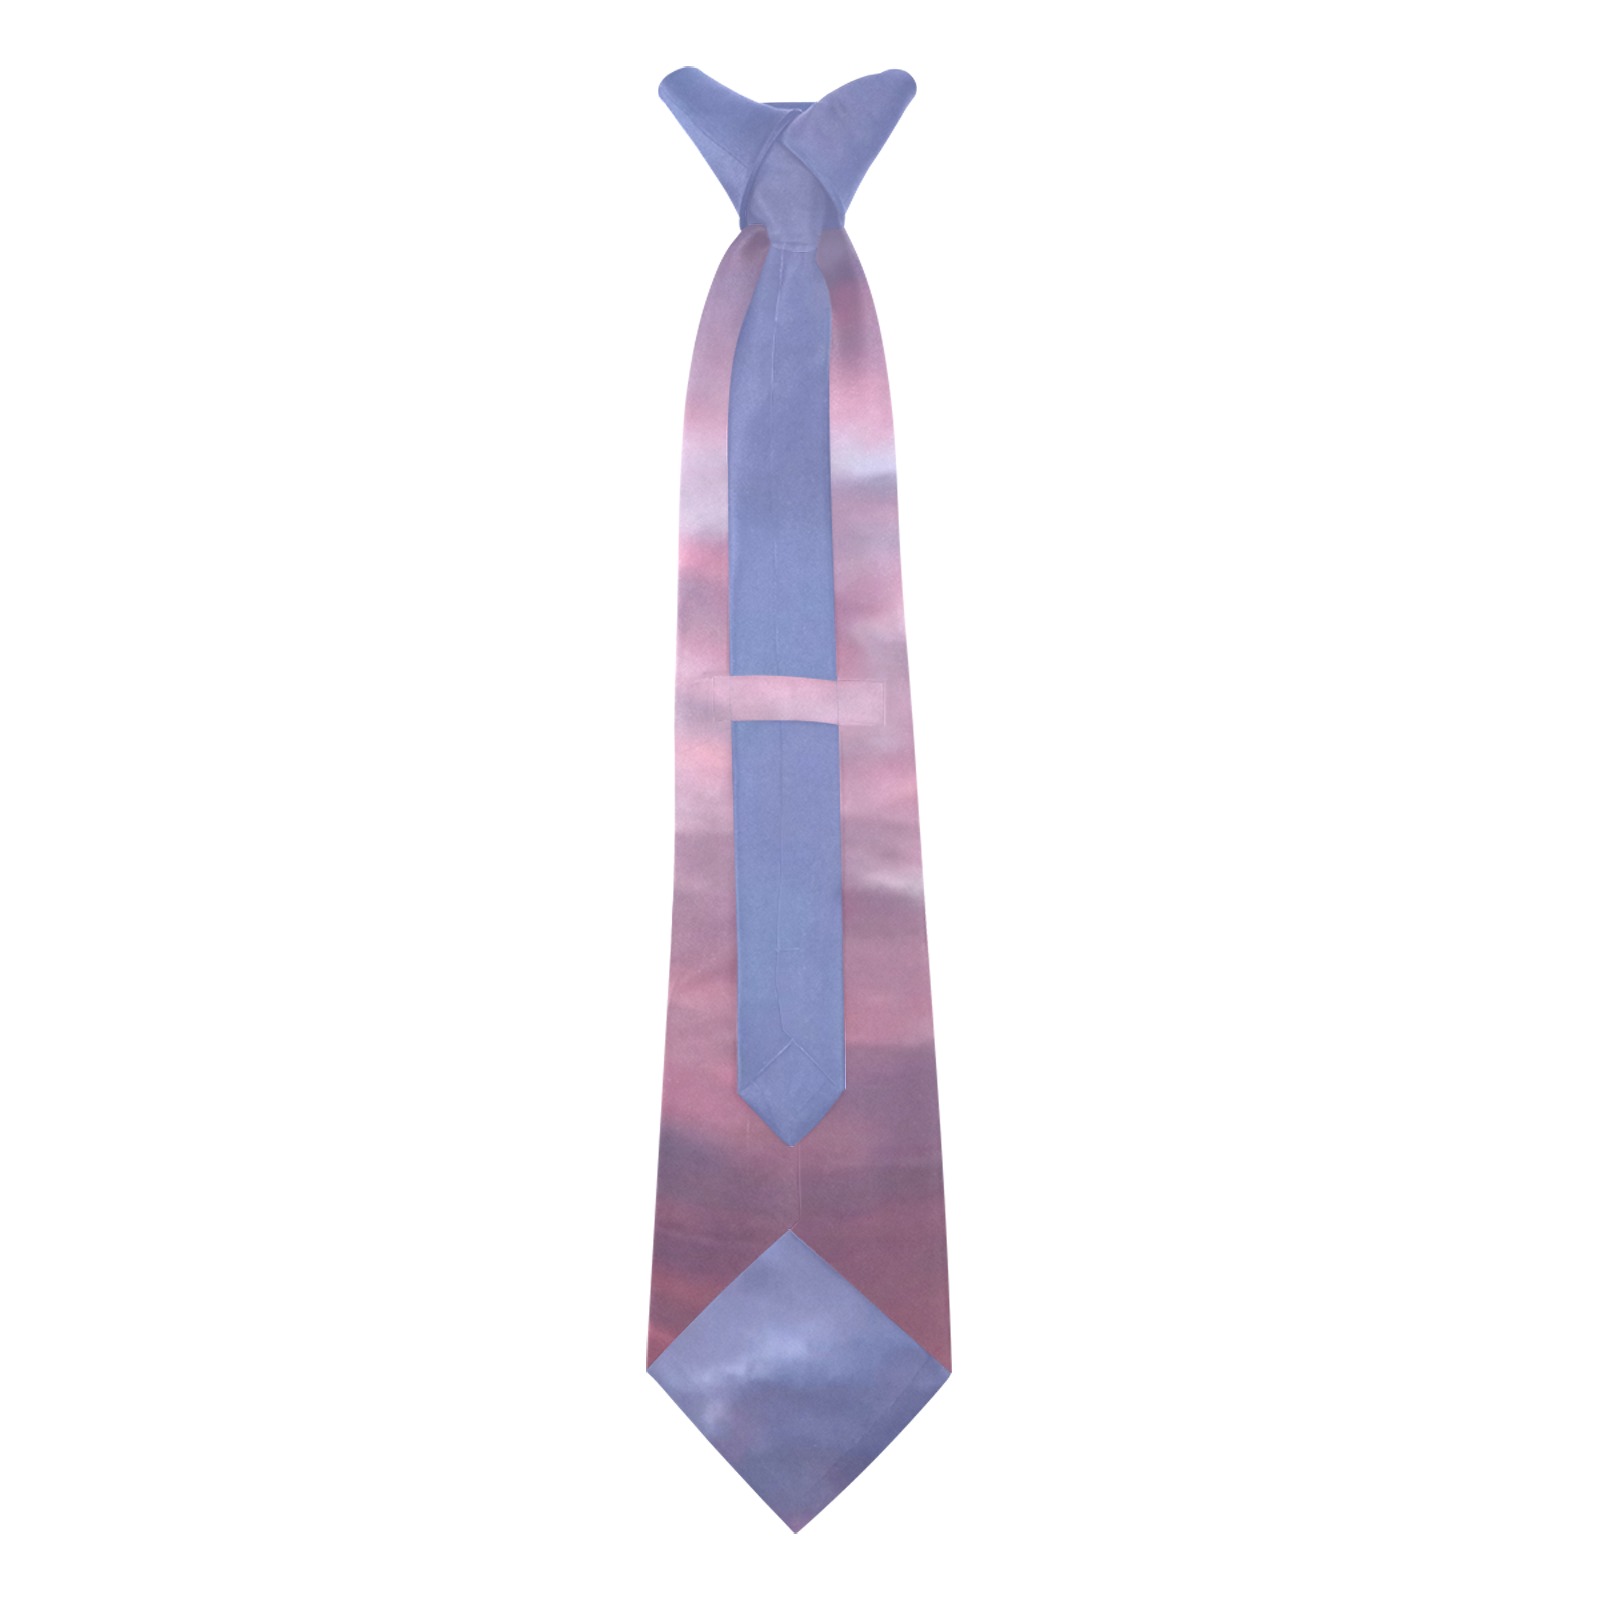 Morning Purple Sunrise Collection Custom Peekaboo Tie with Hidden Picture